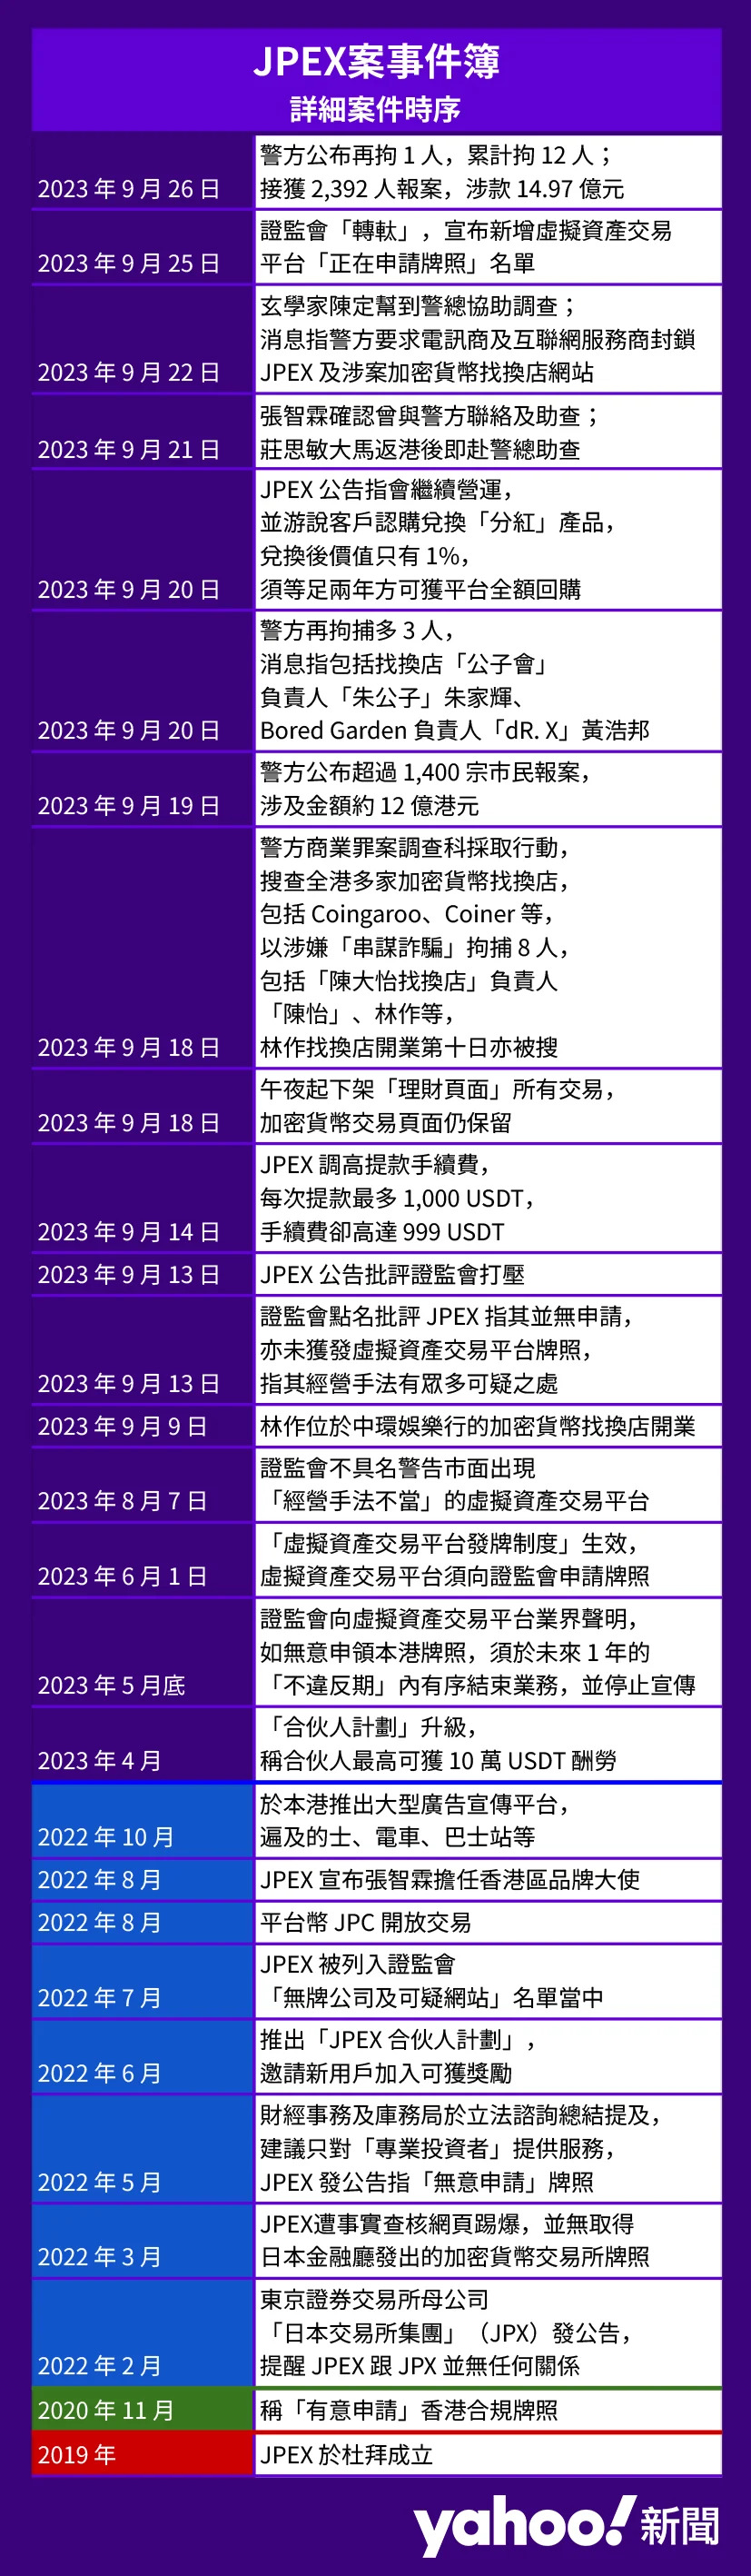 JPEX 案事件簿，2023 年 9 月 26 日更新